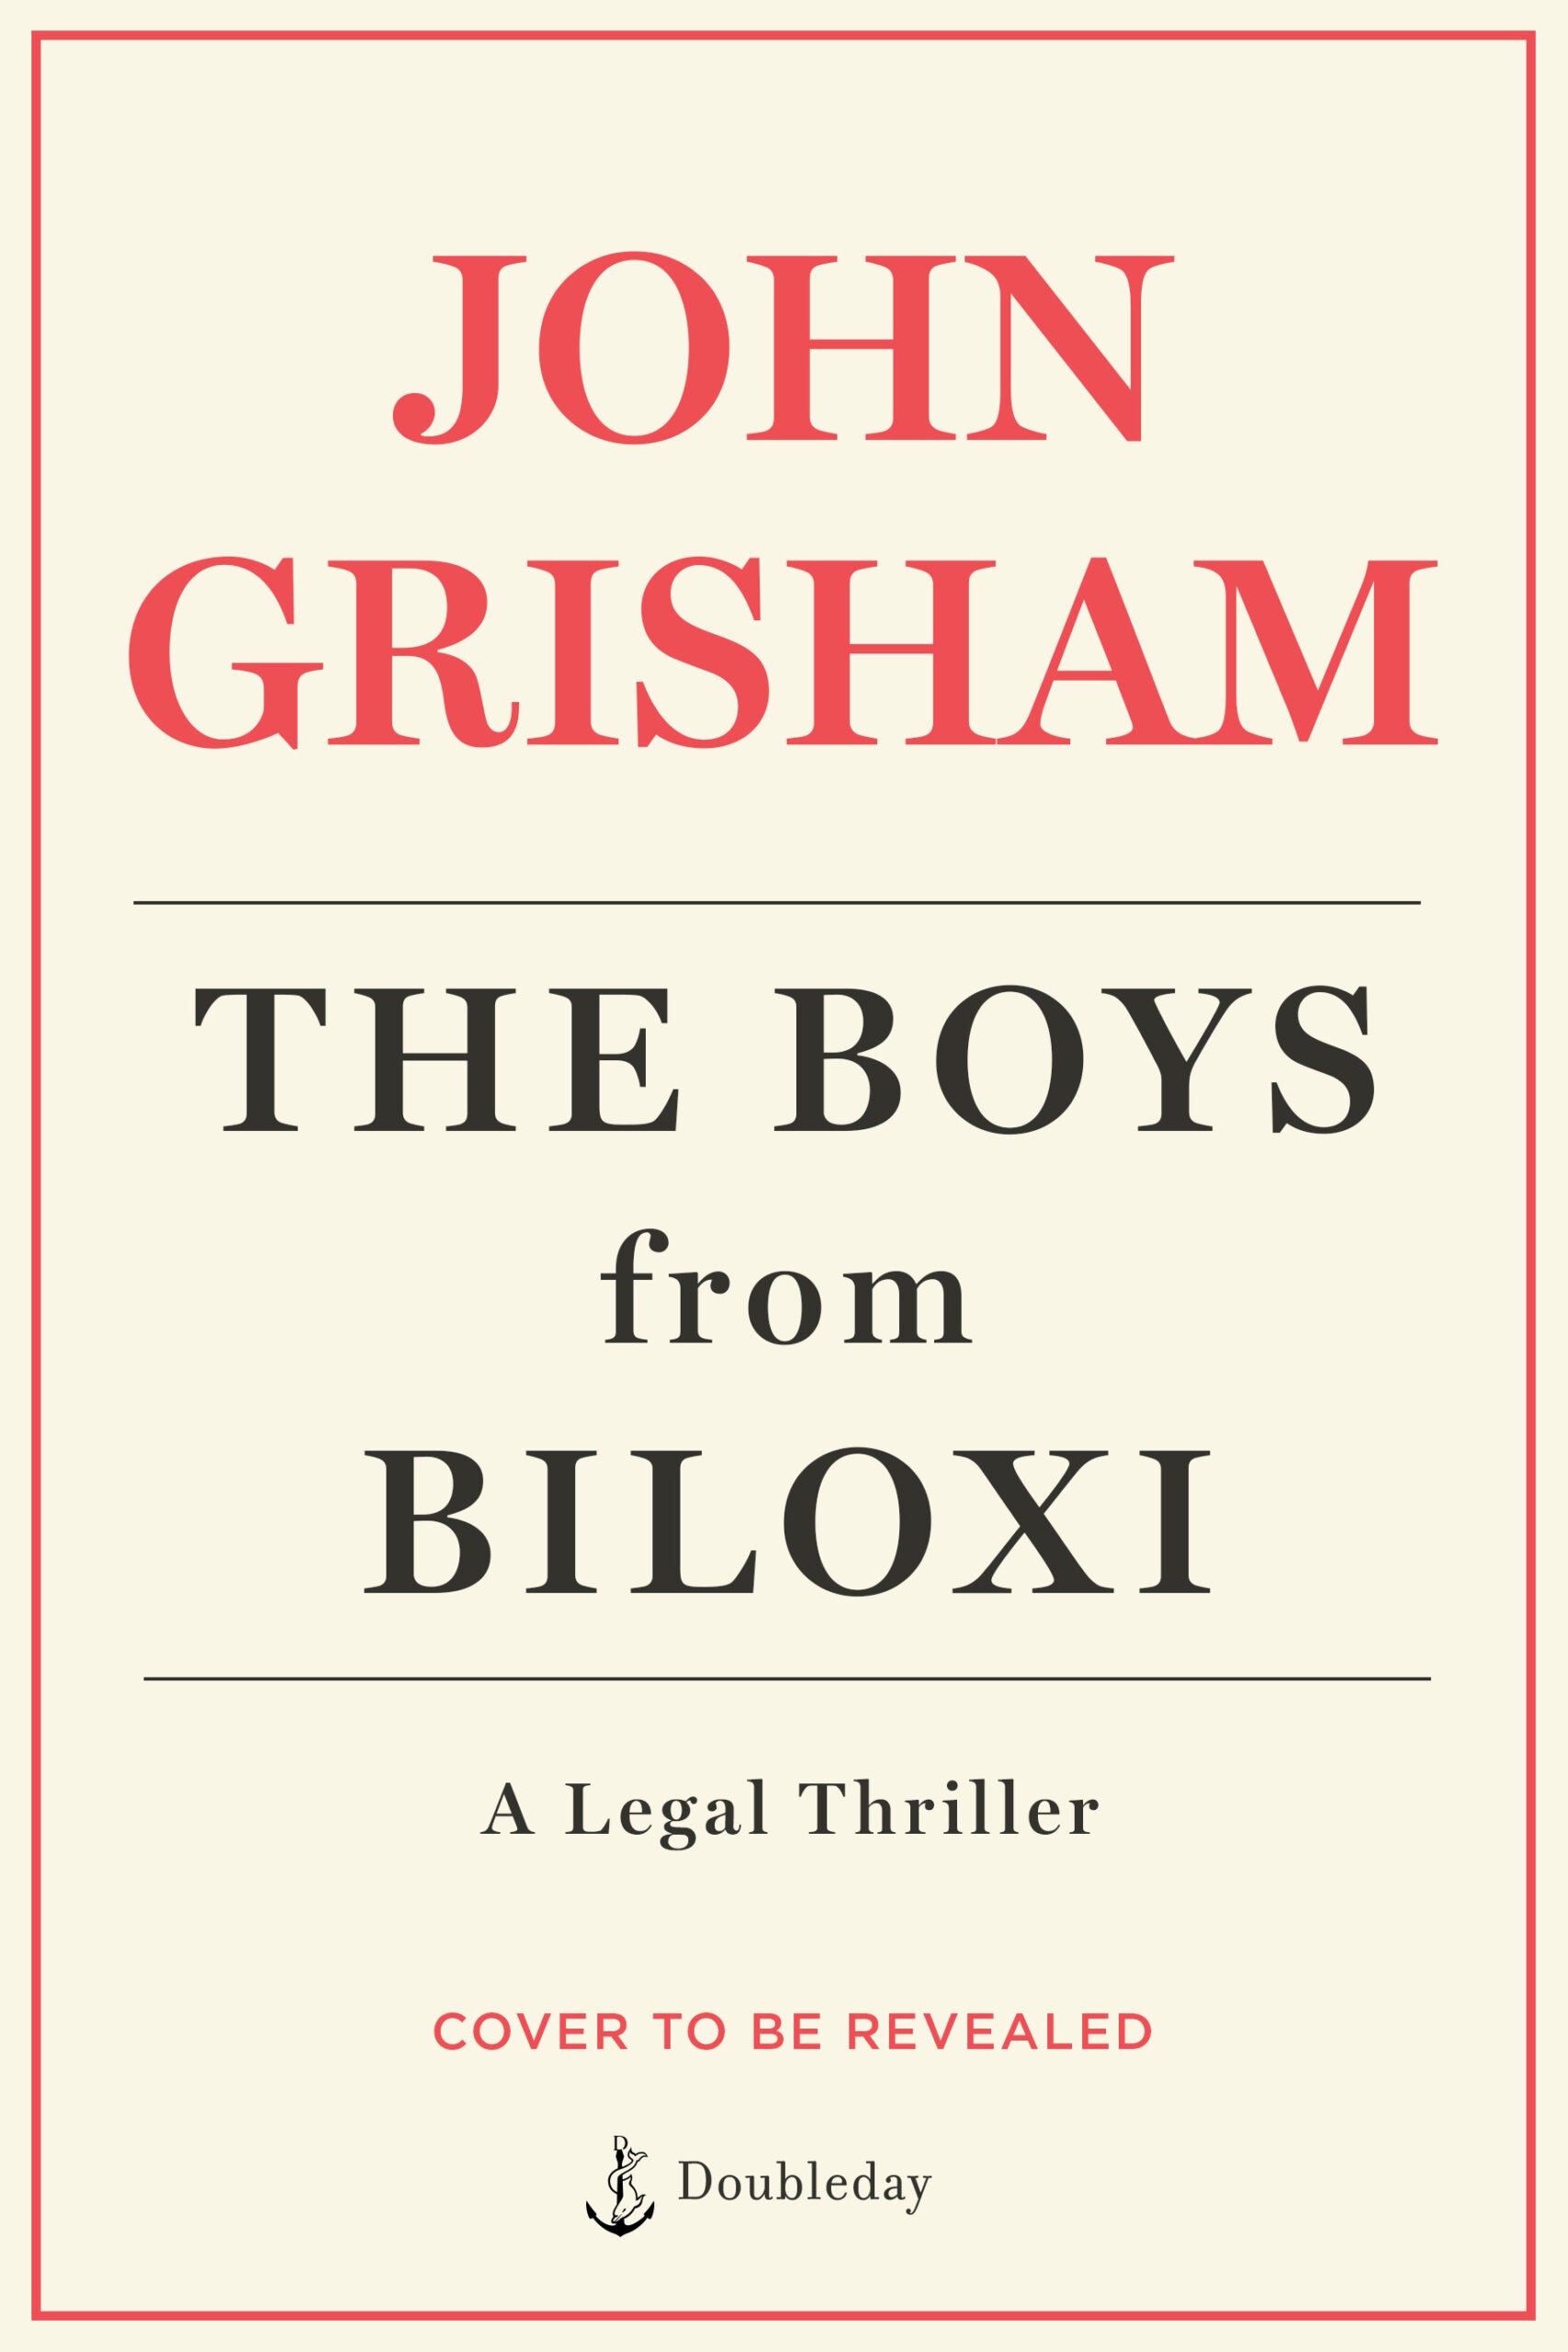 A New Legal Thriller from John Grisham